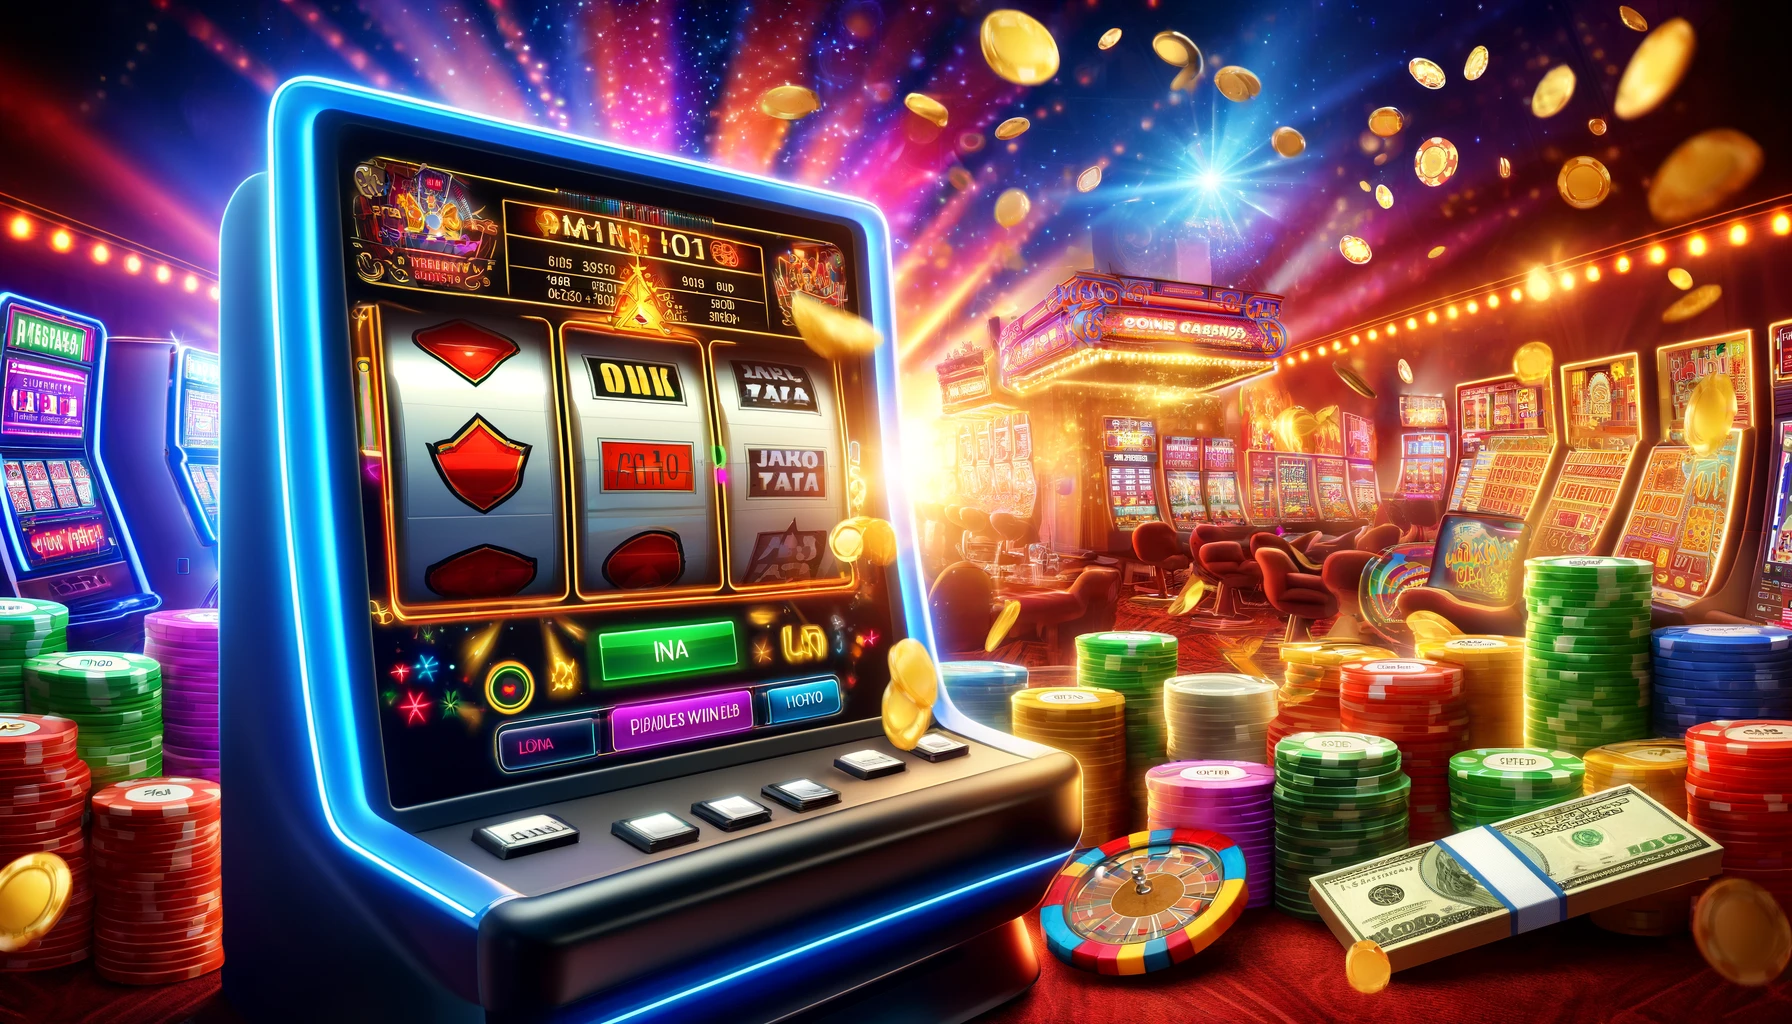 Vibrant online casino scene with winning slot machine, cash, poker chips, and roulette wheel.